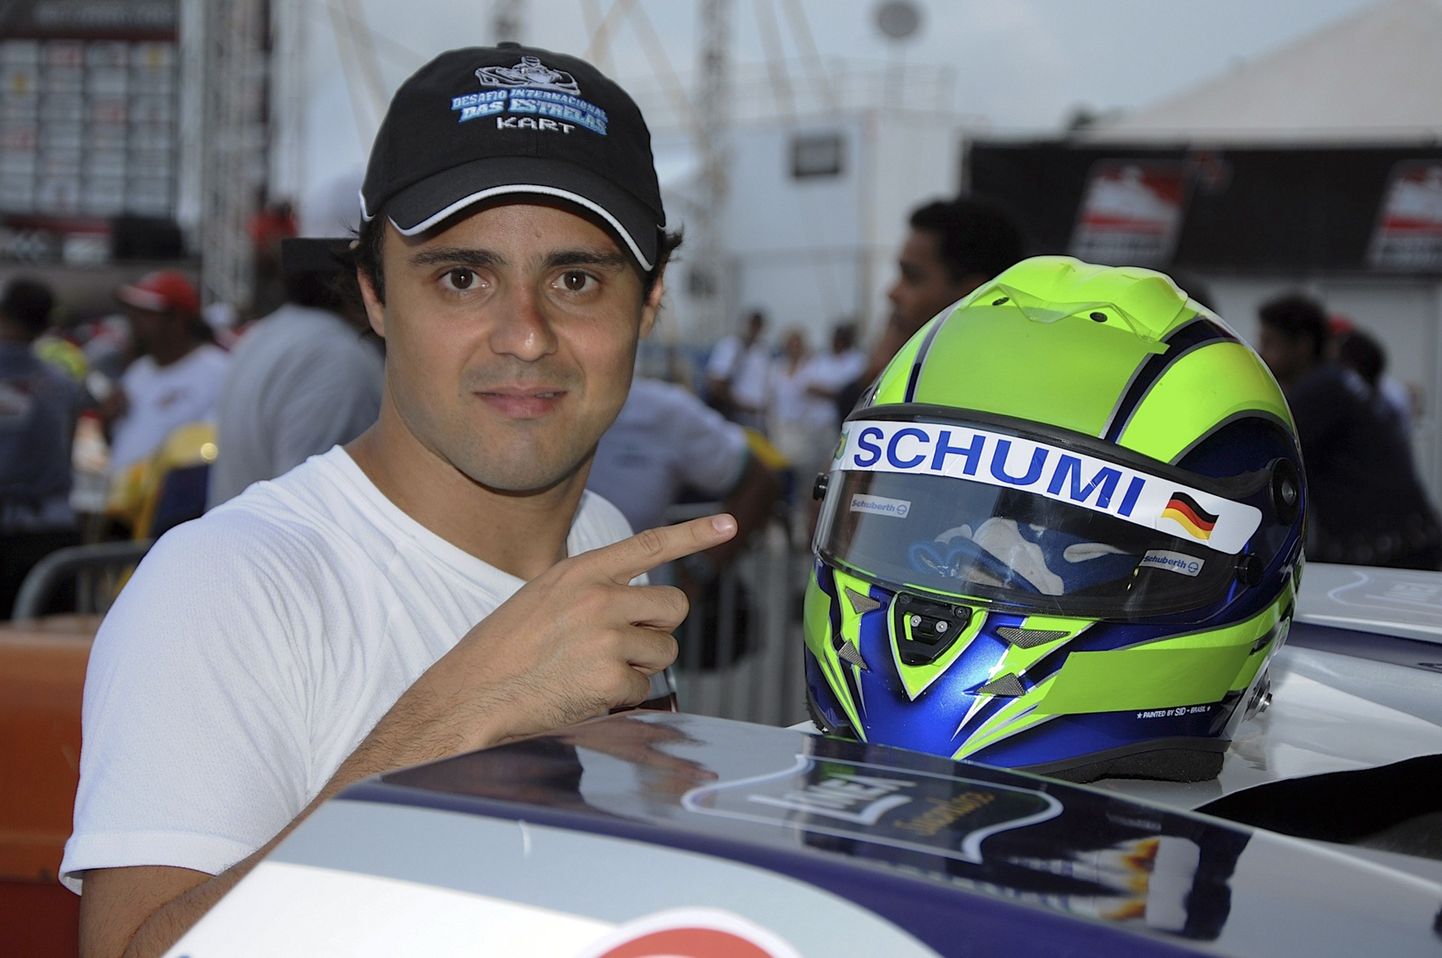 Felipe Massa ja tema Schumacheri nimega kiiver.